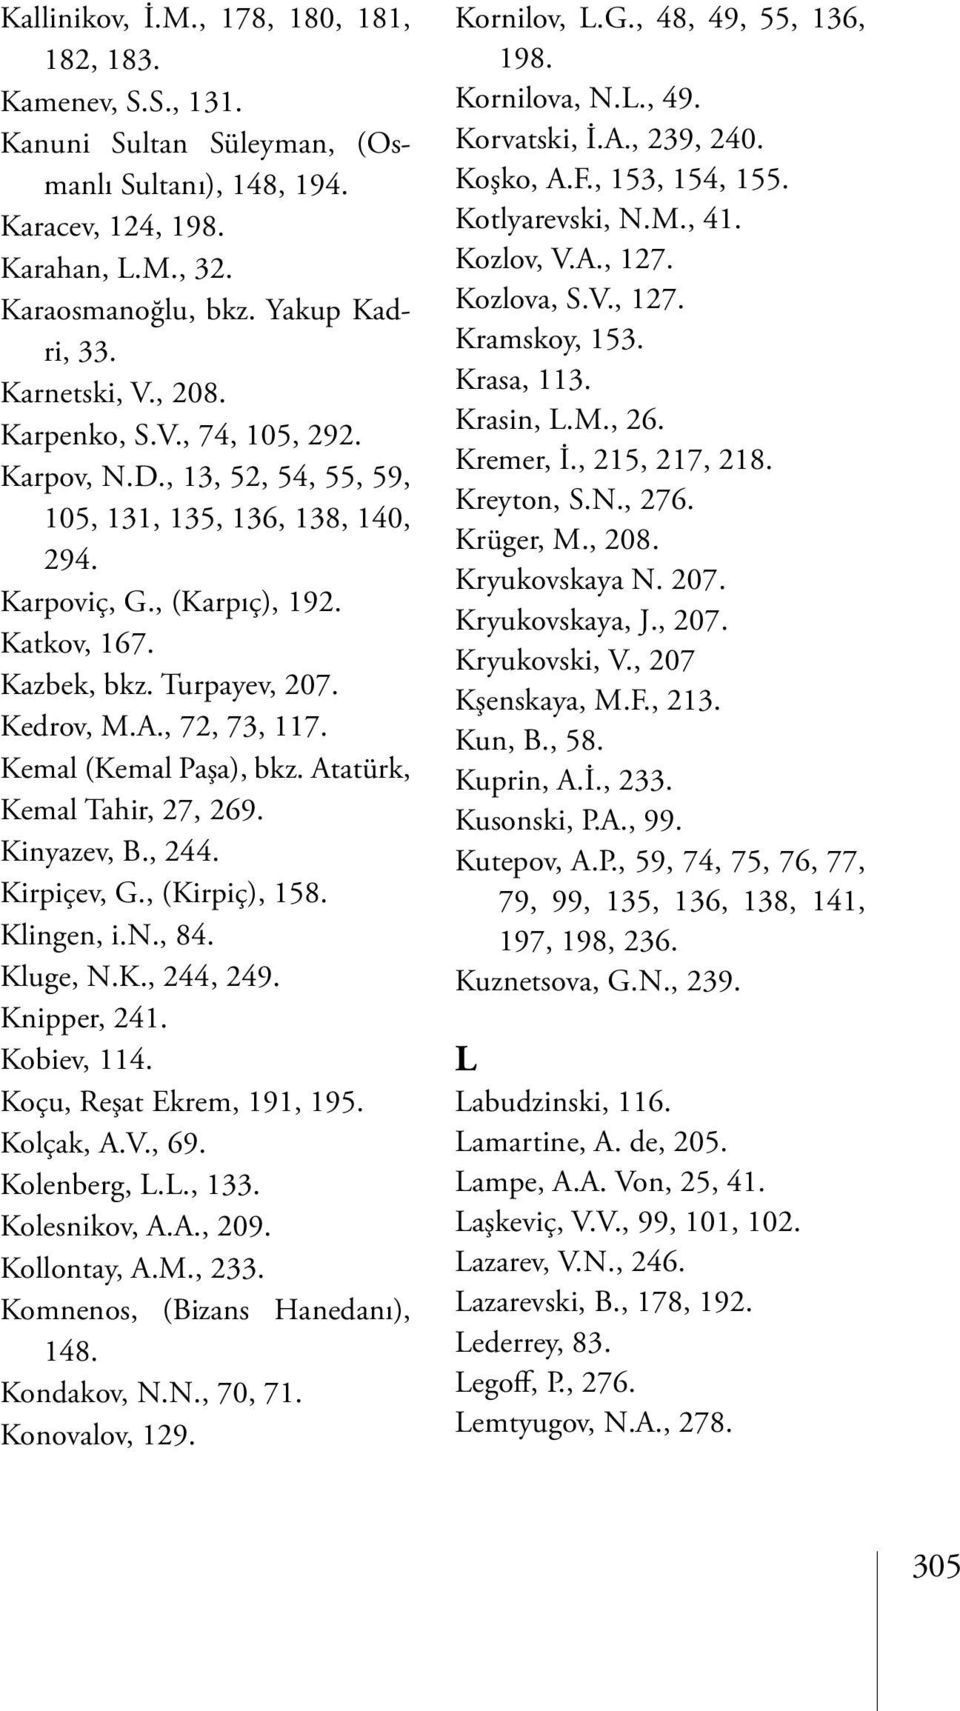 A., 72, 73, 117. Kemal (Kemal Paşa), bkz. Atatürk, Kemal Tahir, 27, 269. Kinyazev, B., 244. Kirpiçev, G., (Kirpiç), 158. Klingen, i.n., 84. Kluge, N.K., 244, 249. Knipper, 241. Kobiev, 114.